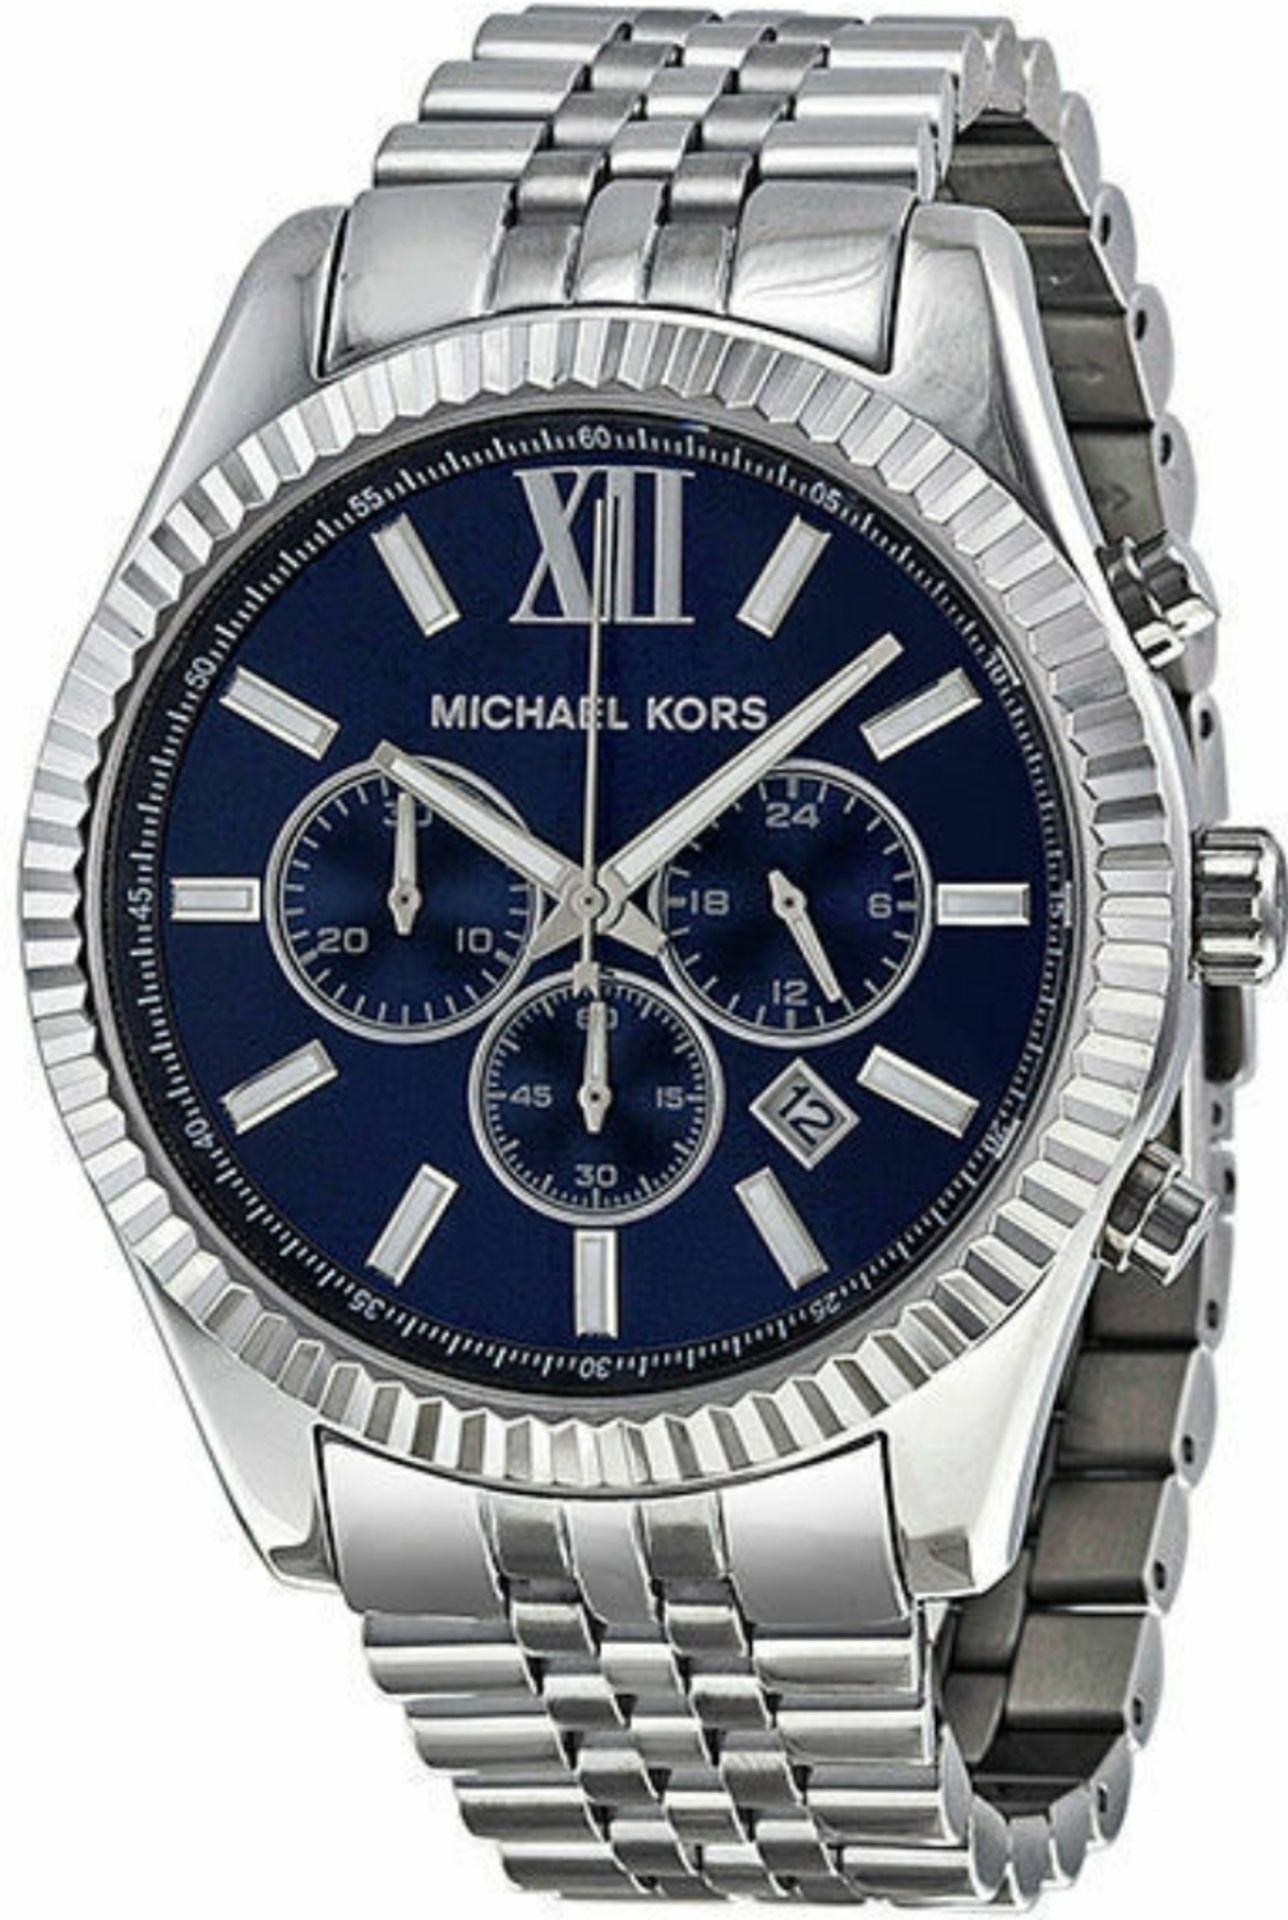 Michael Kors MK8280 Men's Lexington Chronograph Watch - Image 2 of 6